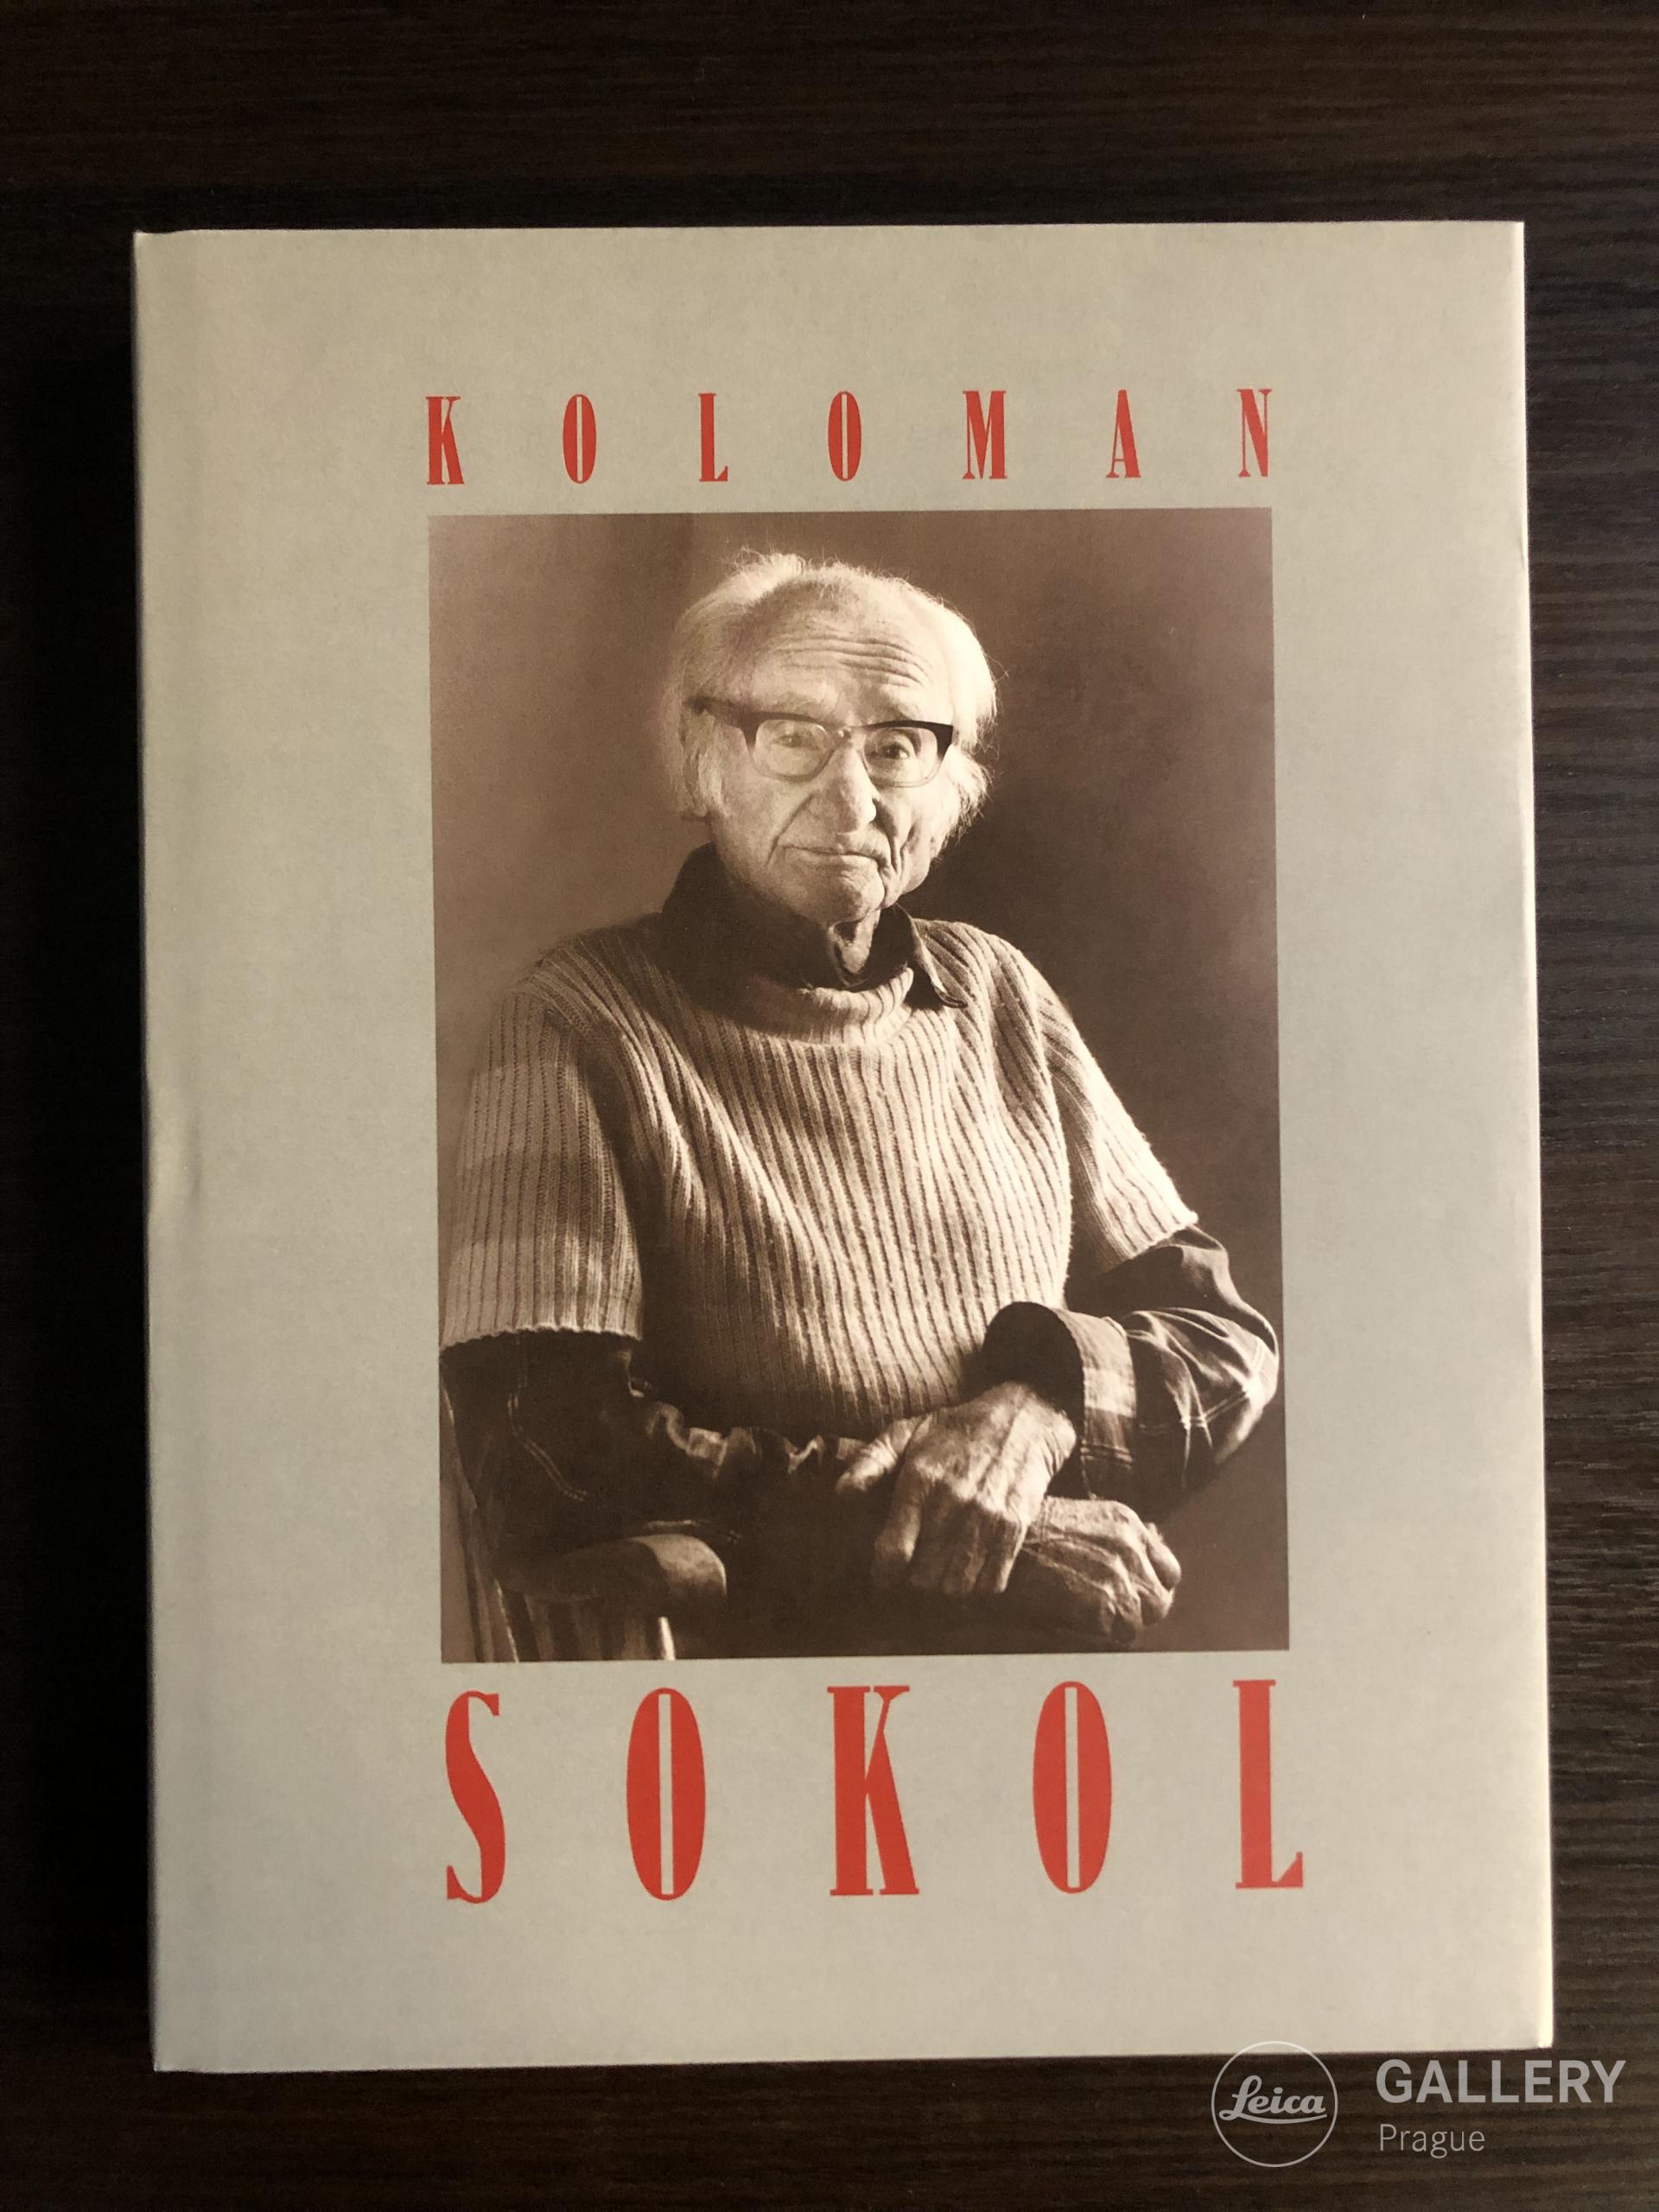 Koloman Sokol - Tibor Huszár